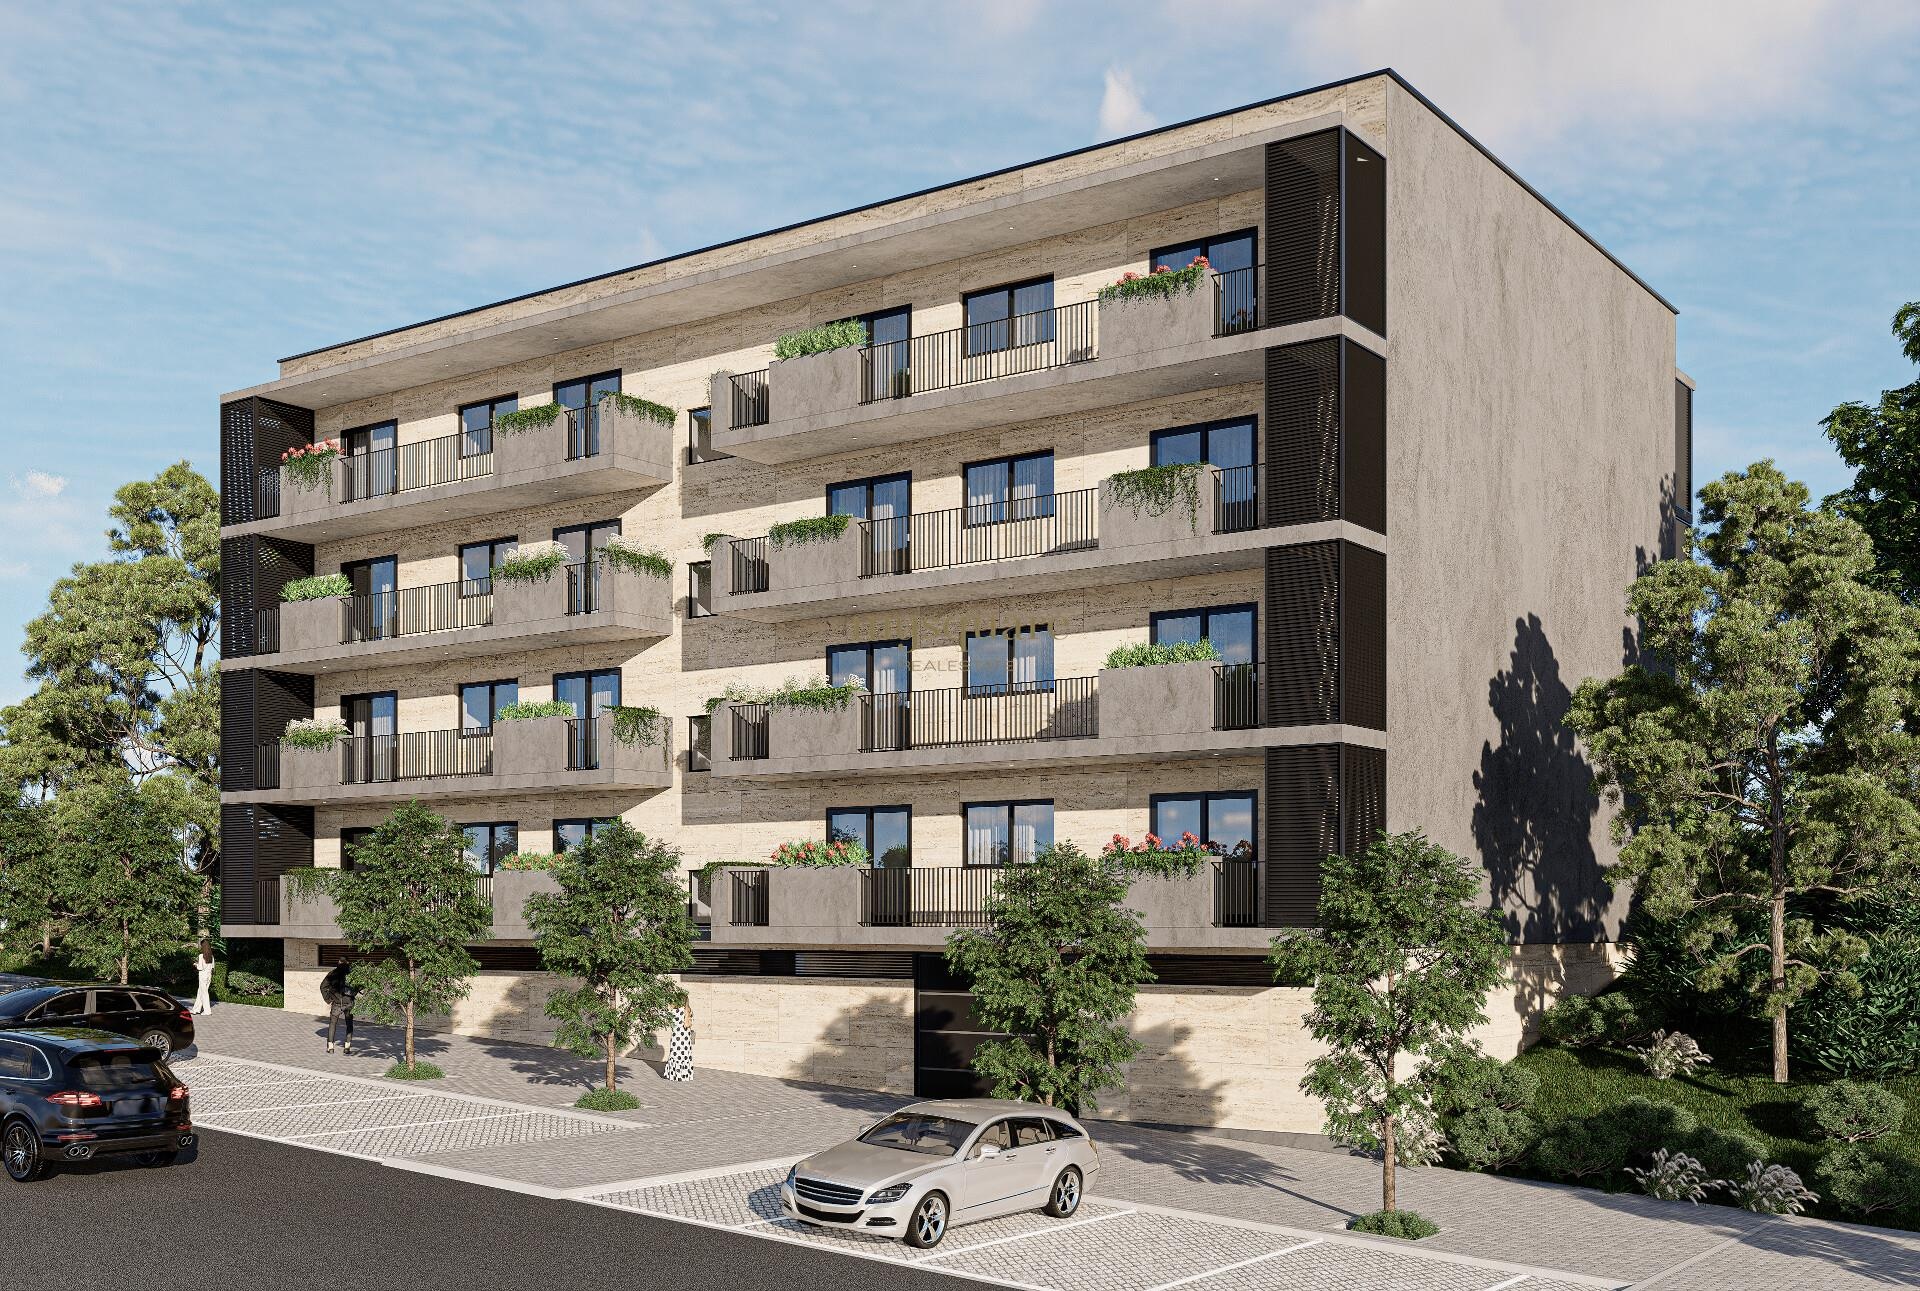 1 bedroom apartment with balcony and parking space - ECO FLATS - VILA NOVA DE GAIA